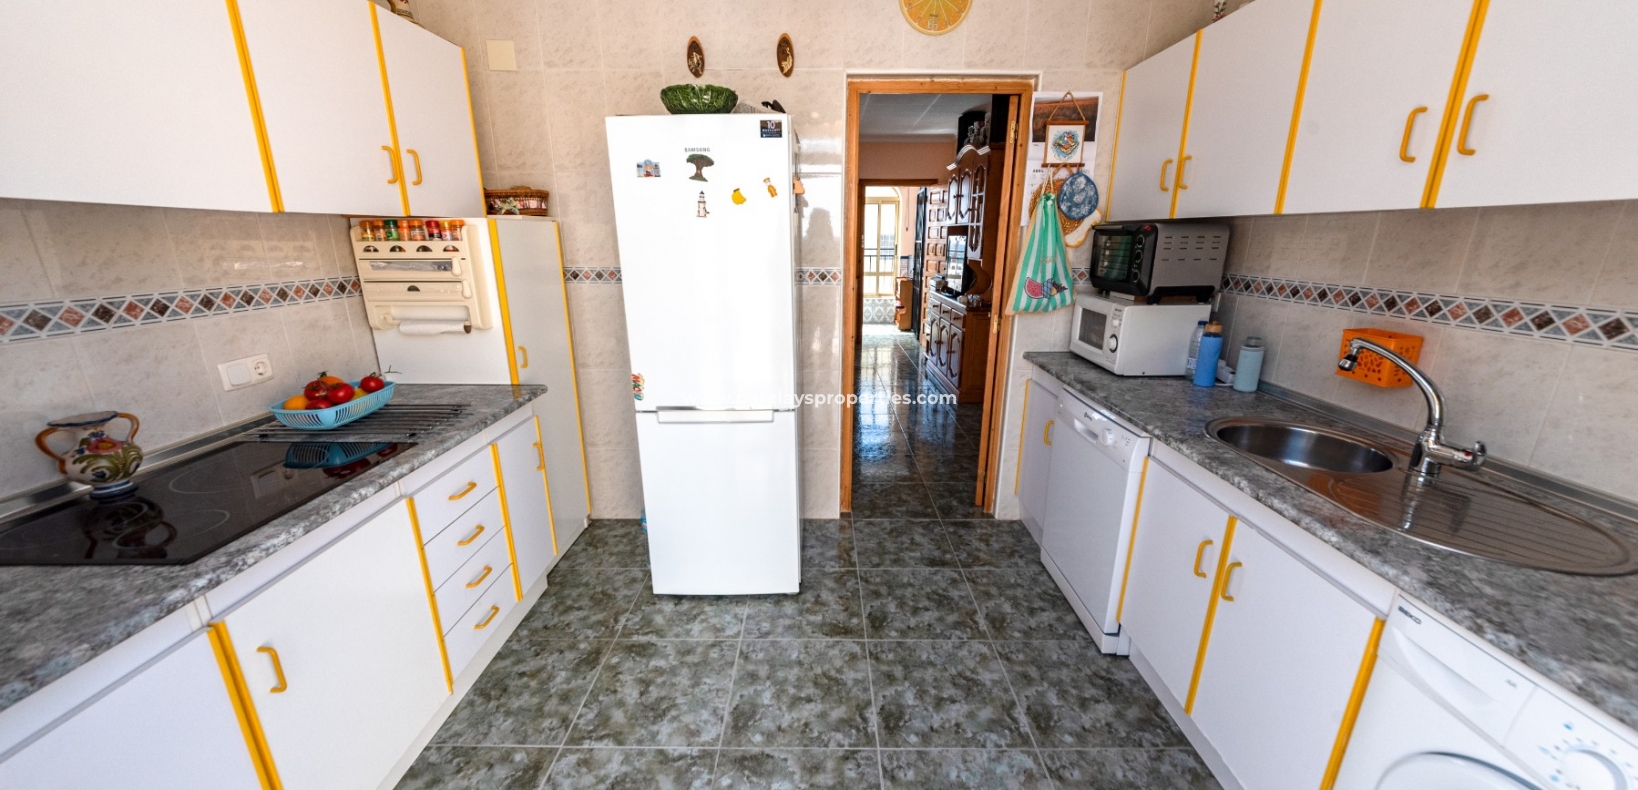 Kitchen - Detached property for sale in La Marina, Alicante